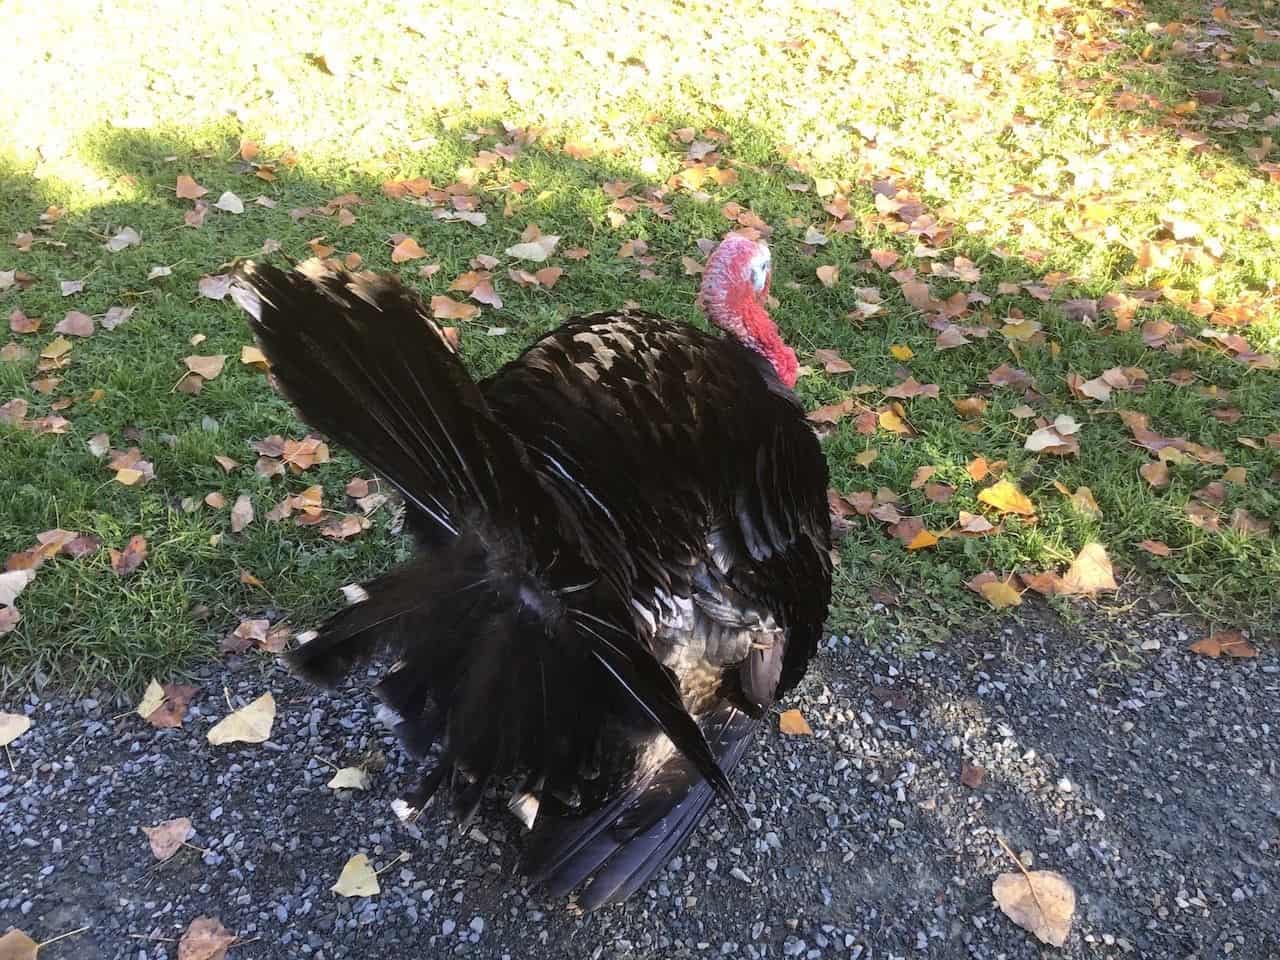 Friendly turkey at Kilby Farm wanders freely at the historic site